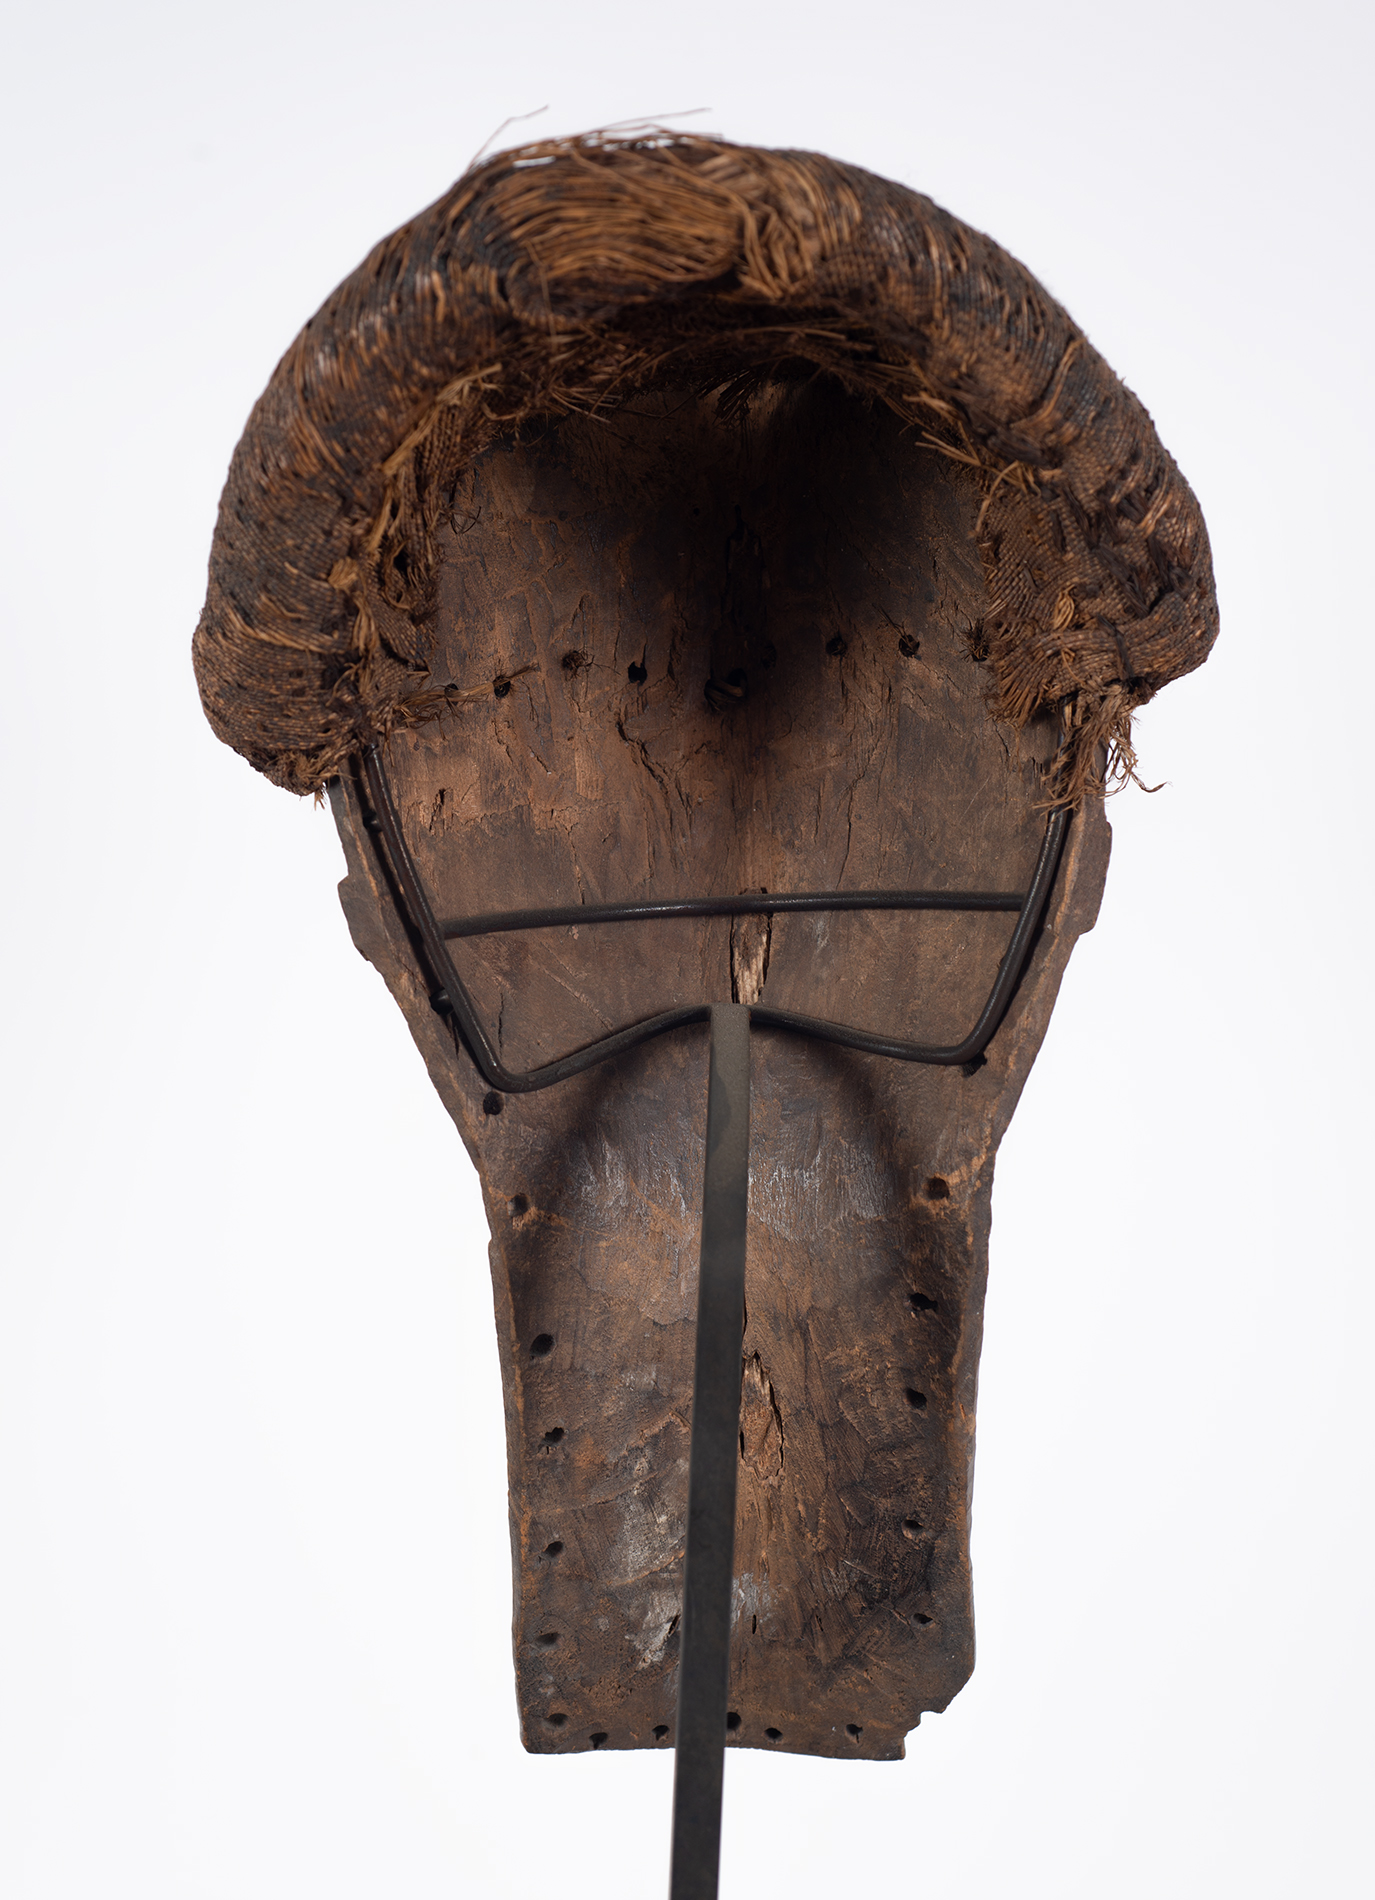 Pende mask, Congo - Image 6 of 9